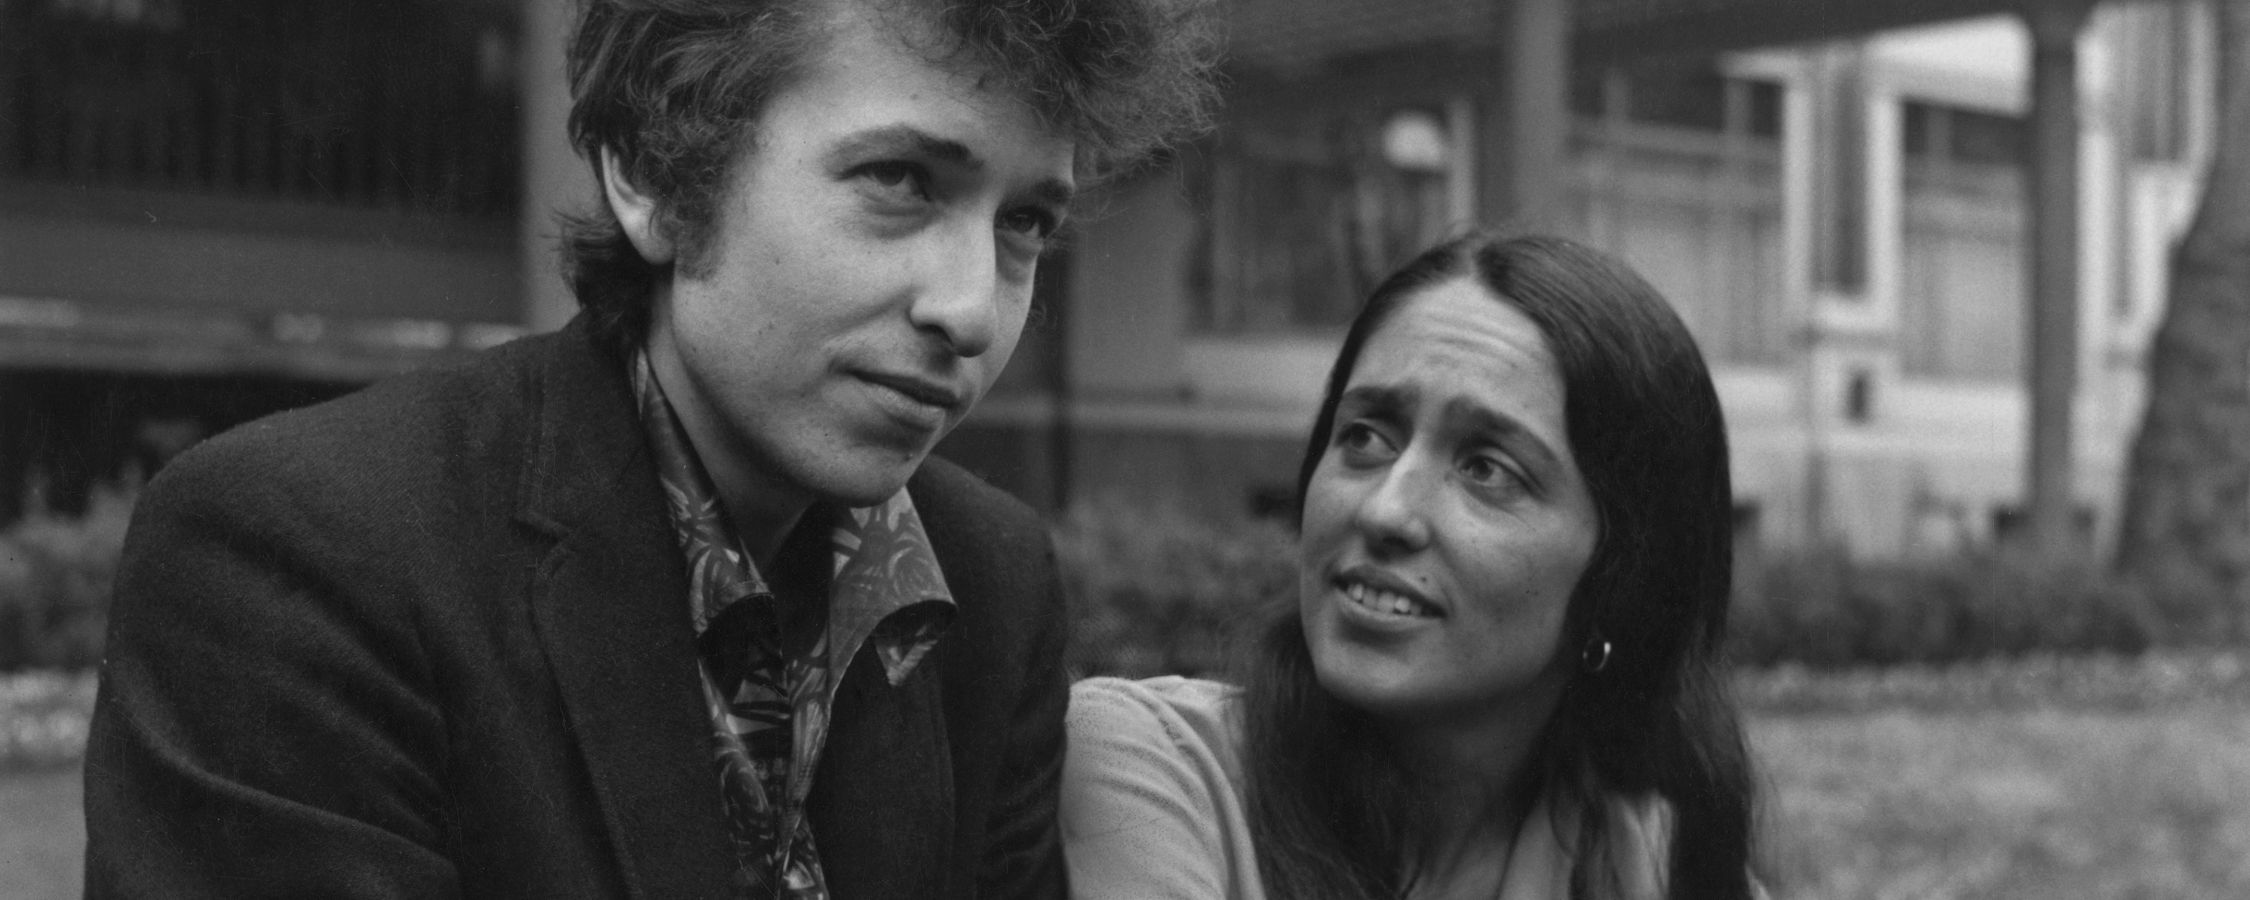 Joan Baez looks at Bob Dylan